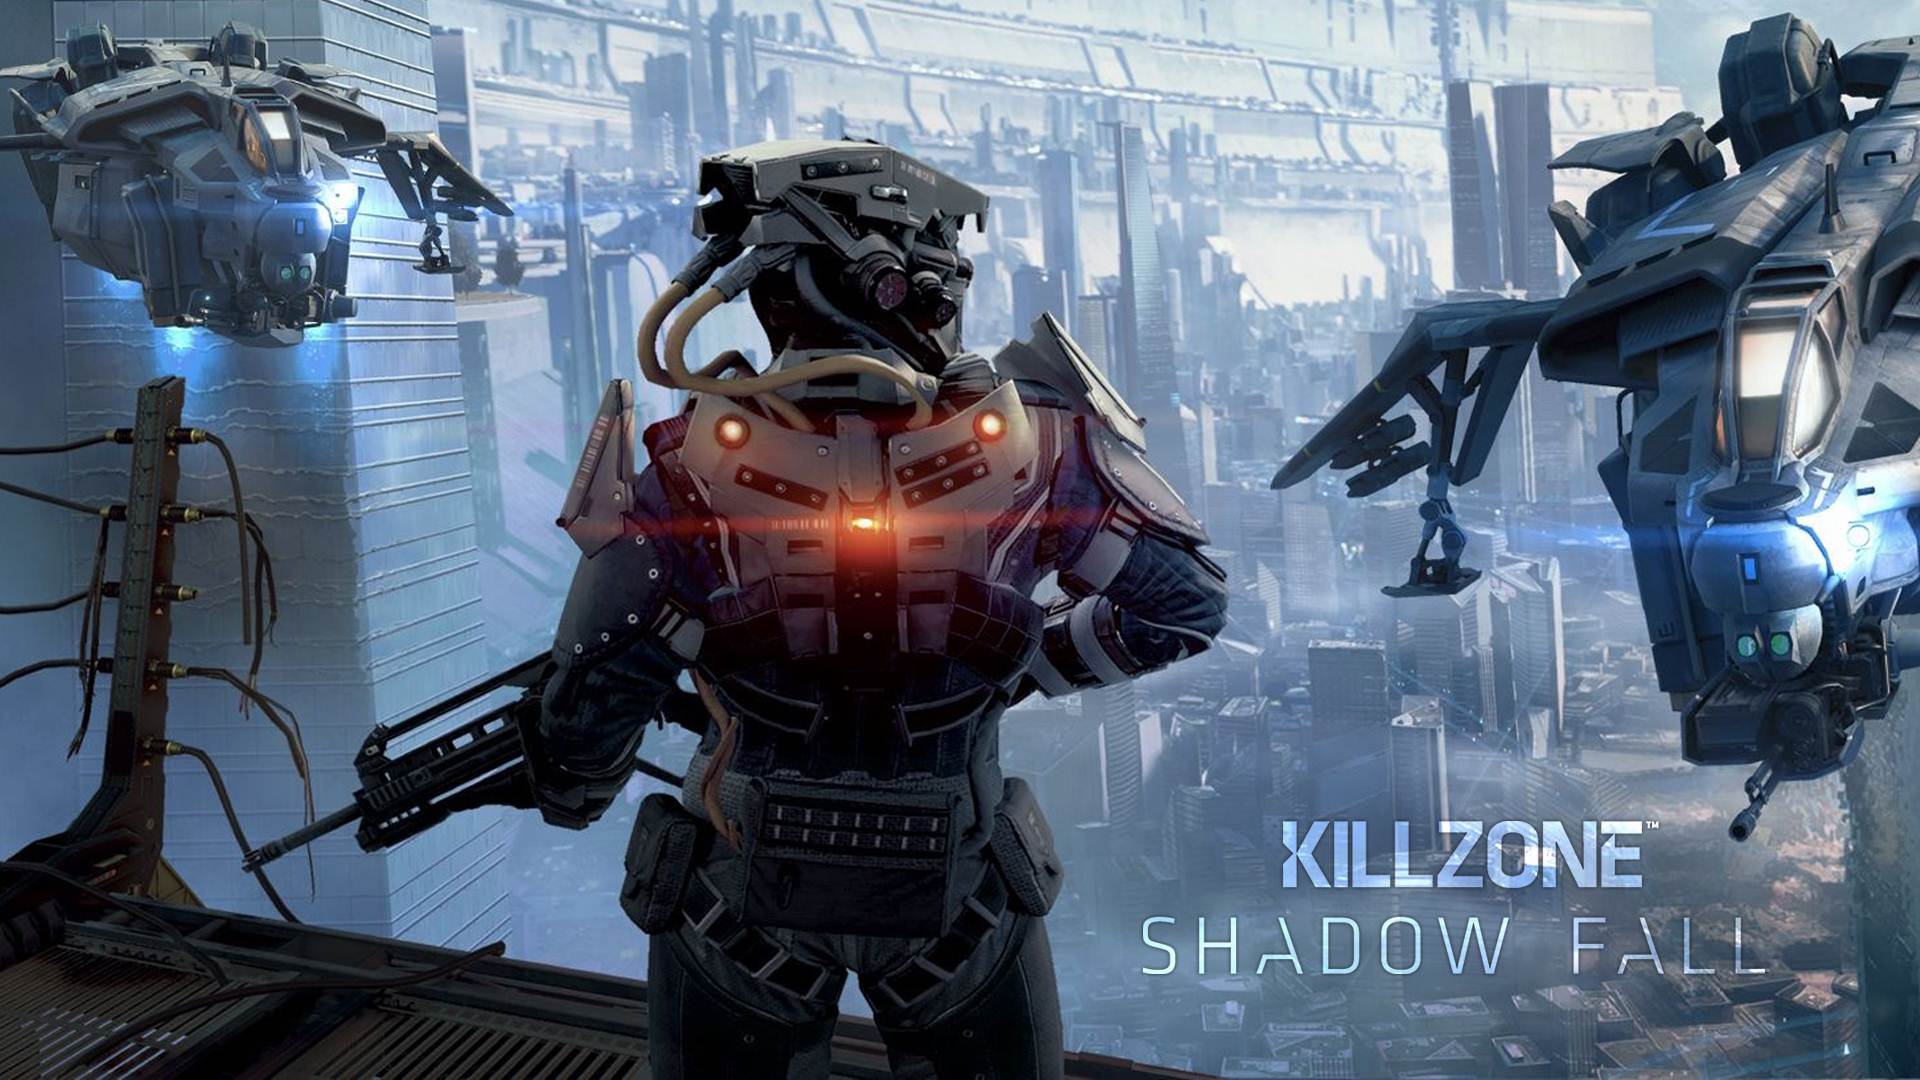 killzone shadow fall ps4 wallpaper in hd GamingBoltcom Video Game